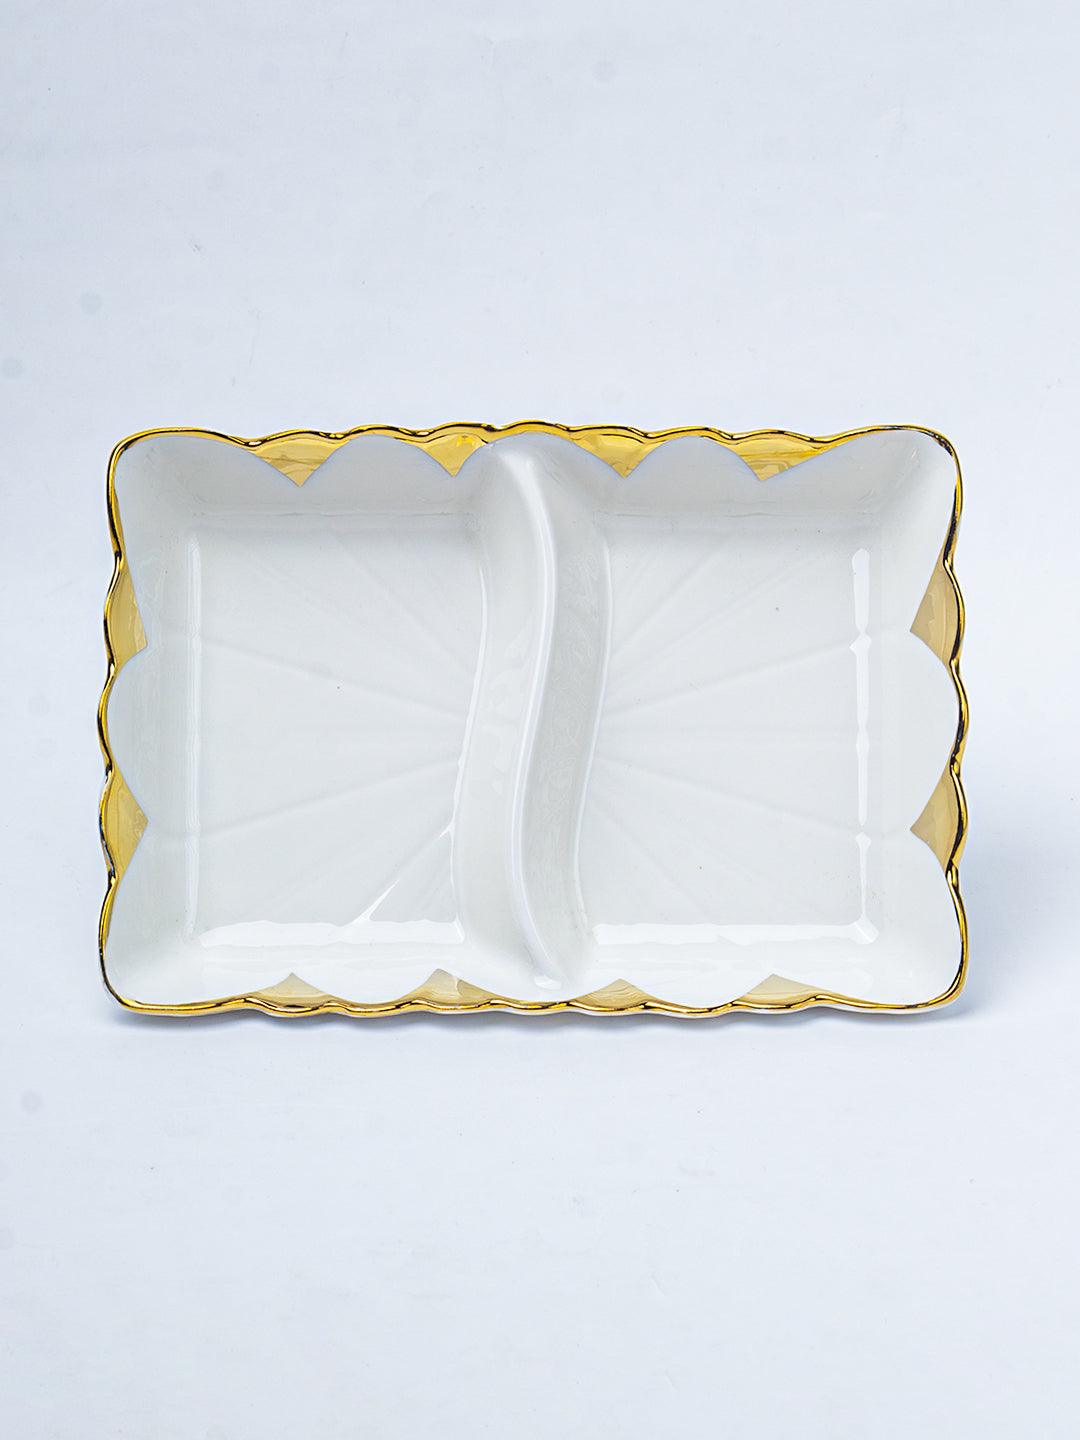 Antique Off White Ceramic Divided Serving Dish - 21 x 14 x 6CM - 3